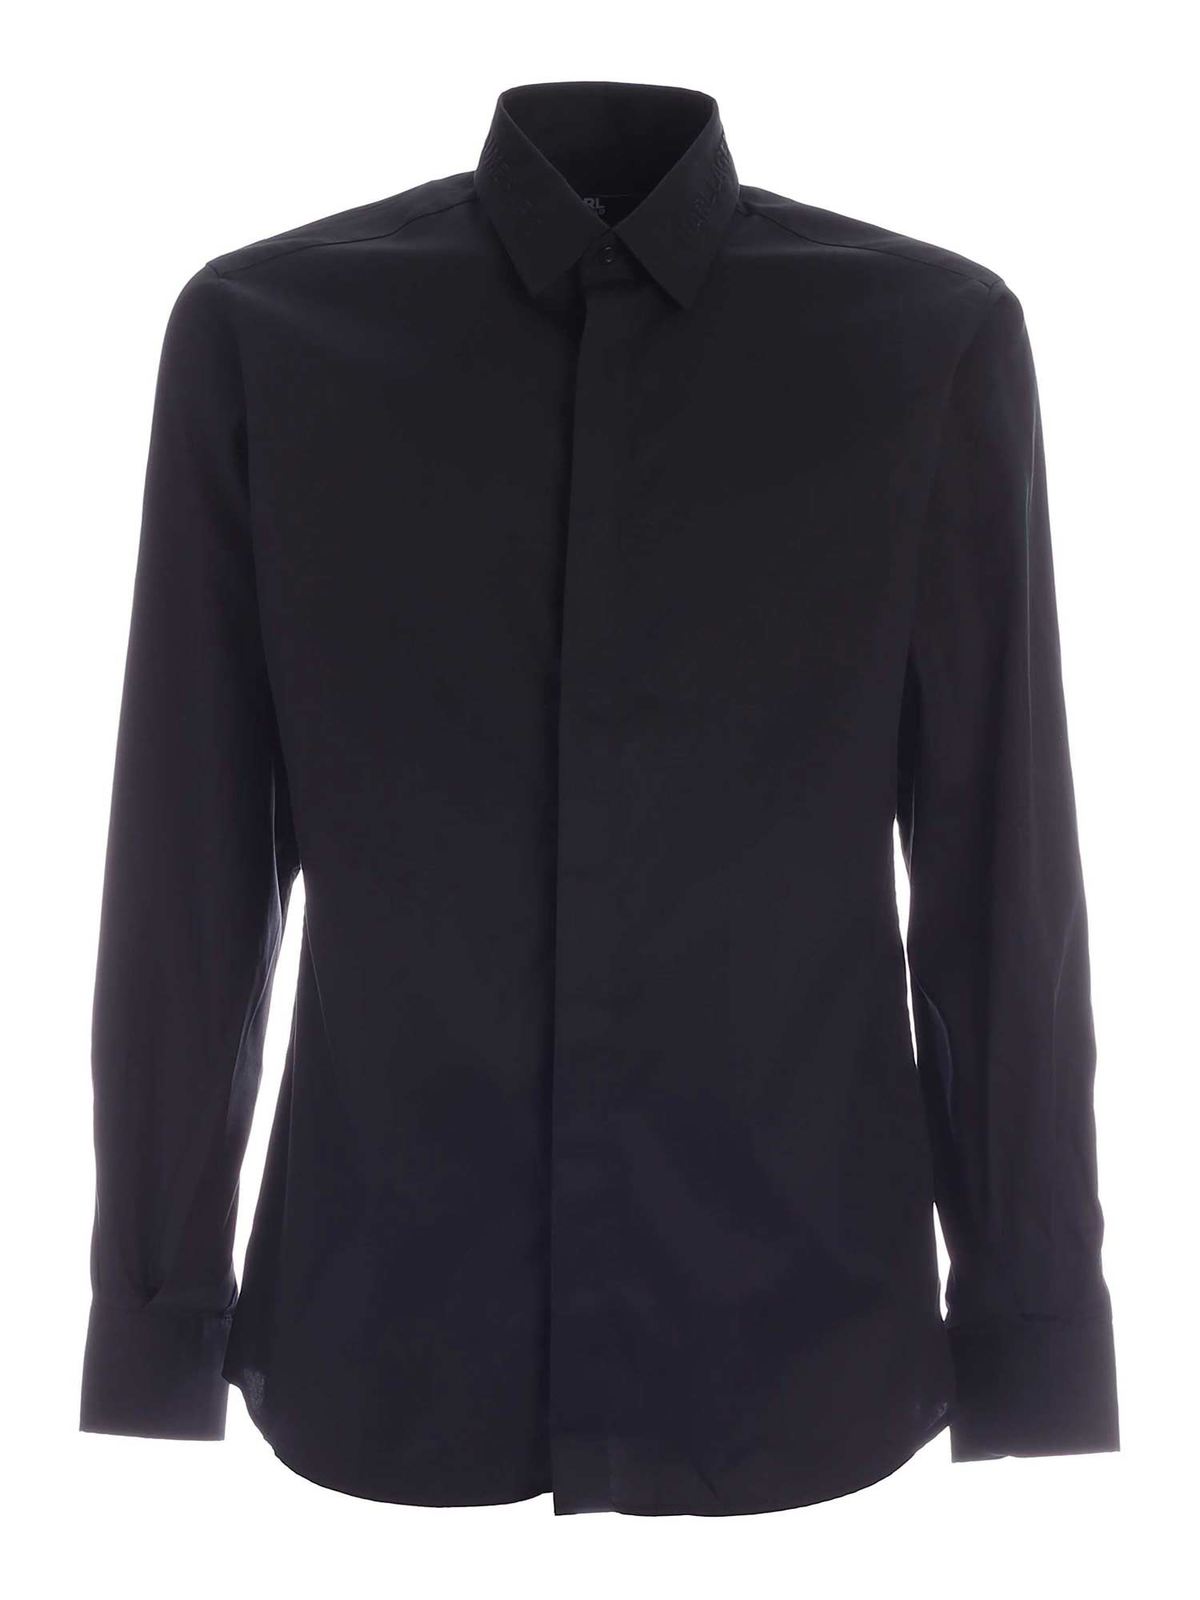 Shop Karl Lagerfeld Camisa - Rue St. Guillaume In Black